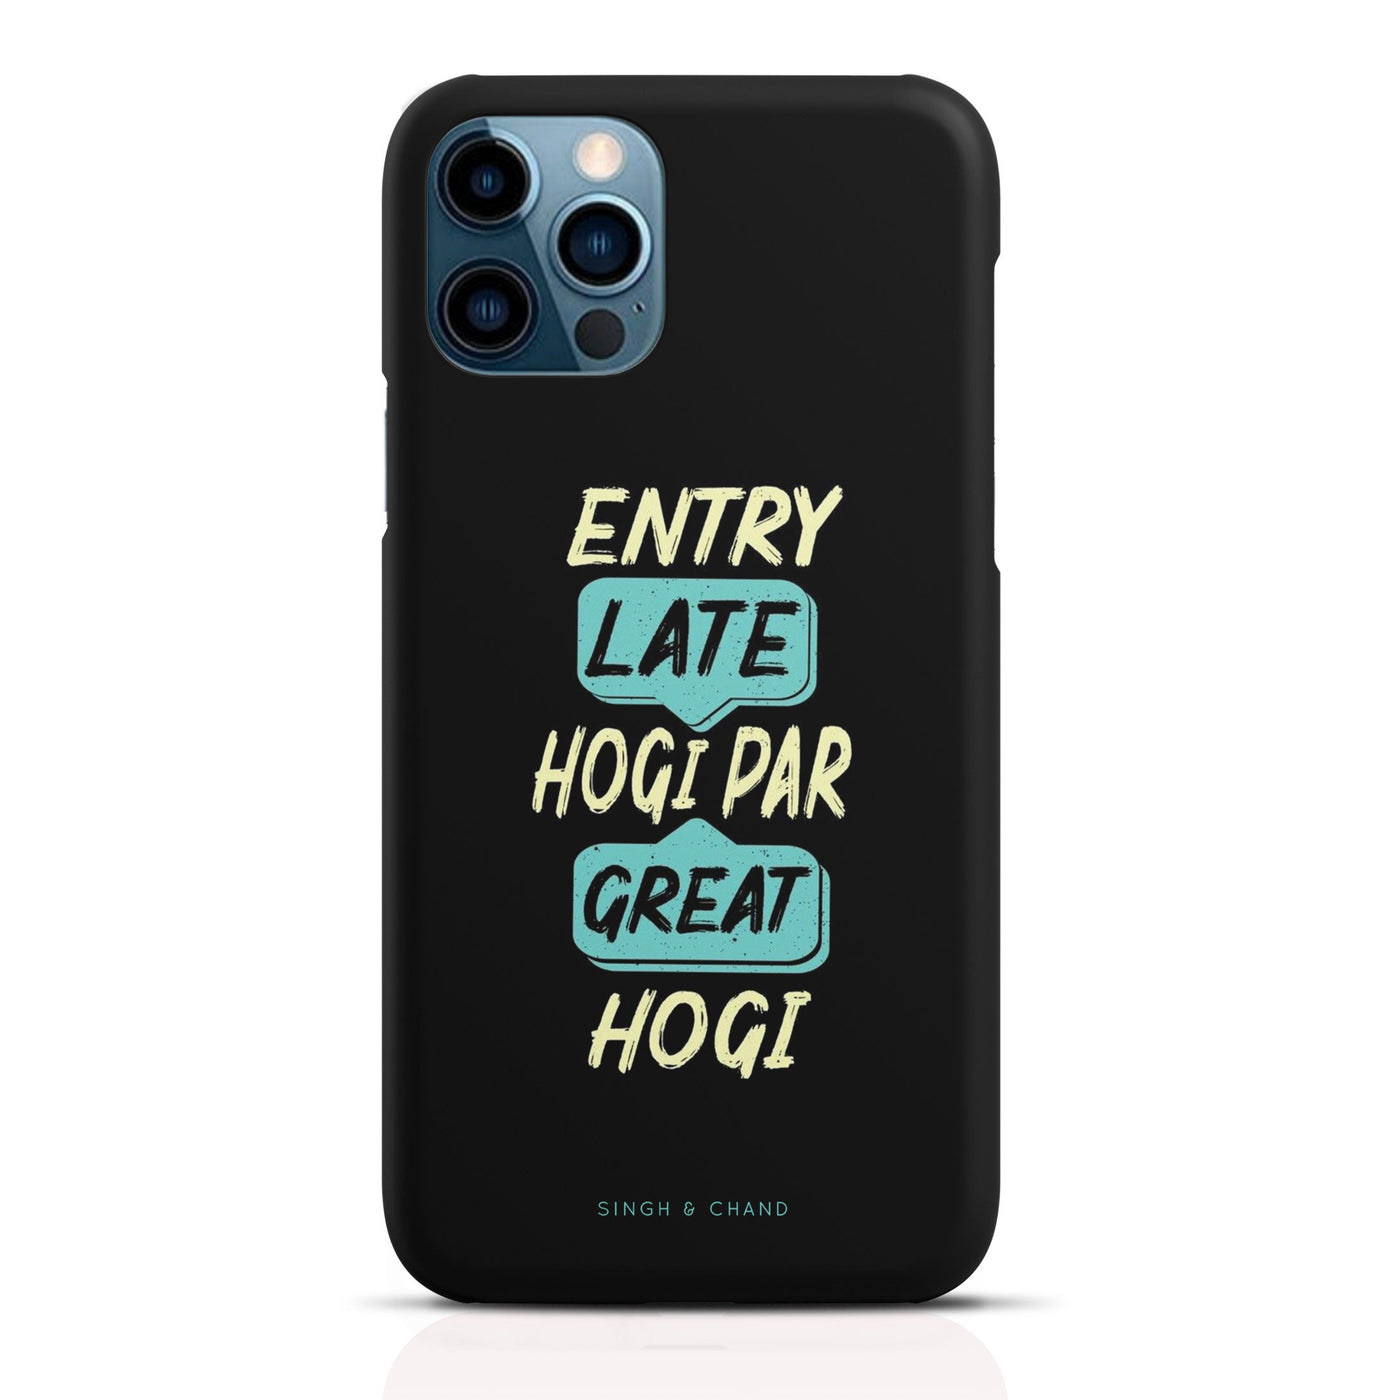 Entry late hogi par great hogi Matt Phone Case